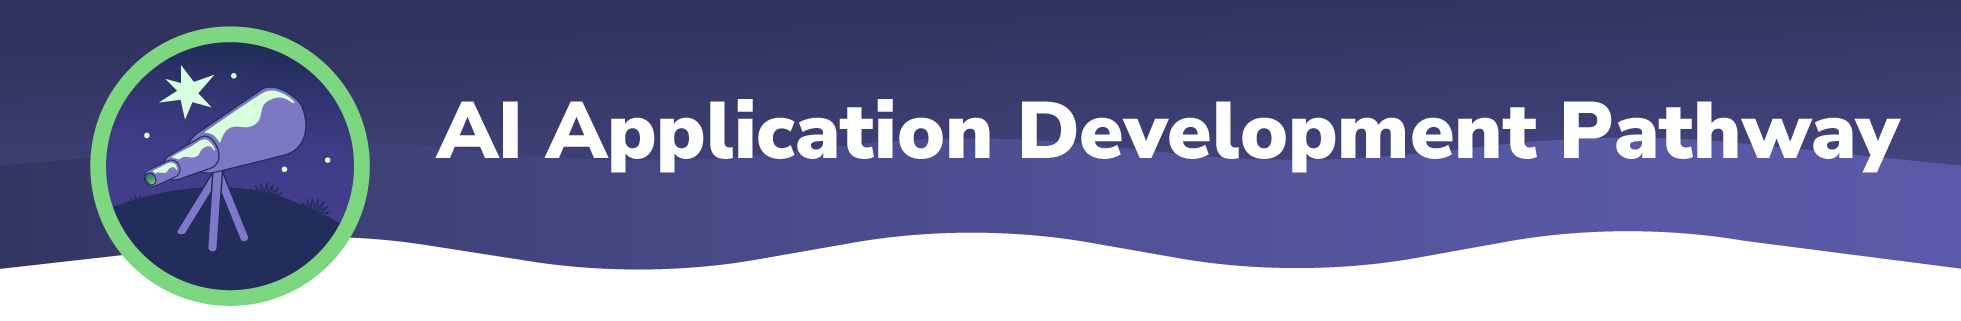 AI Application Development Pathway header